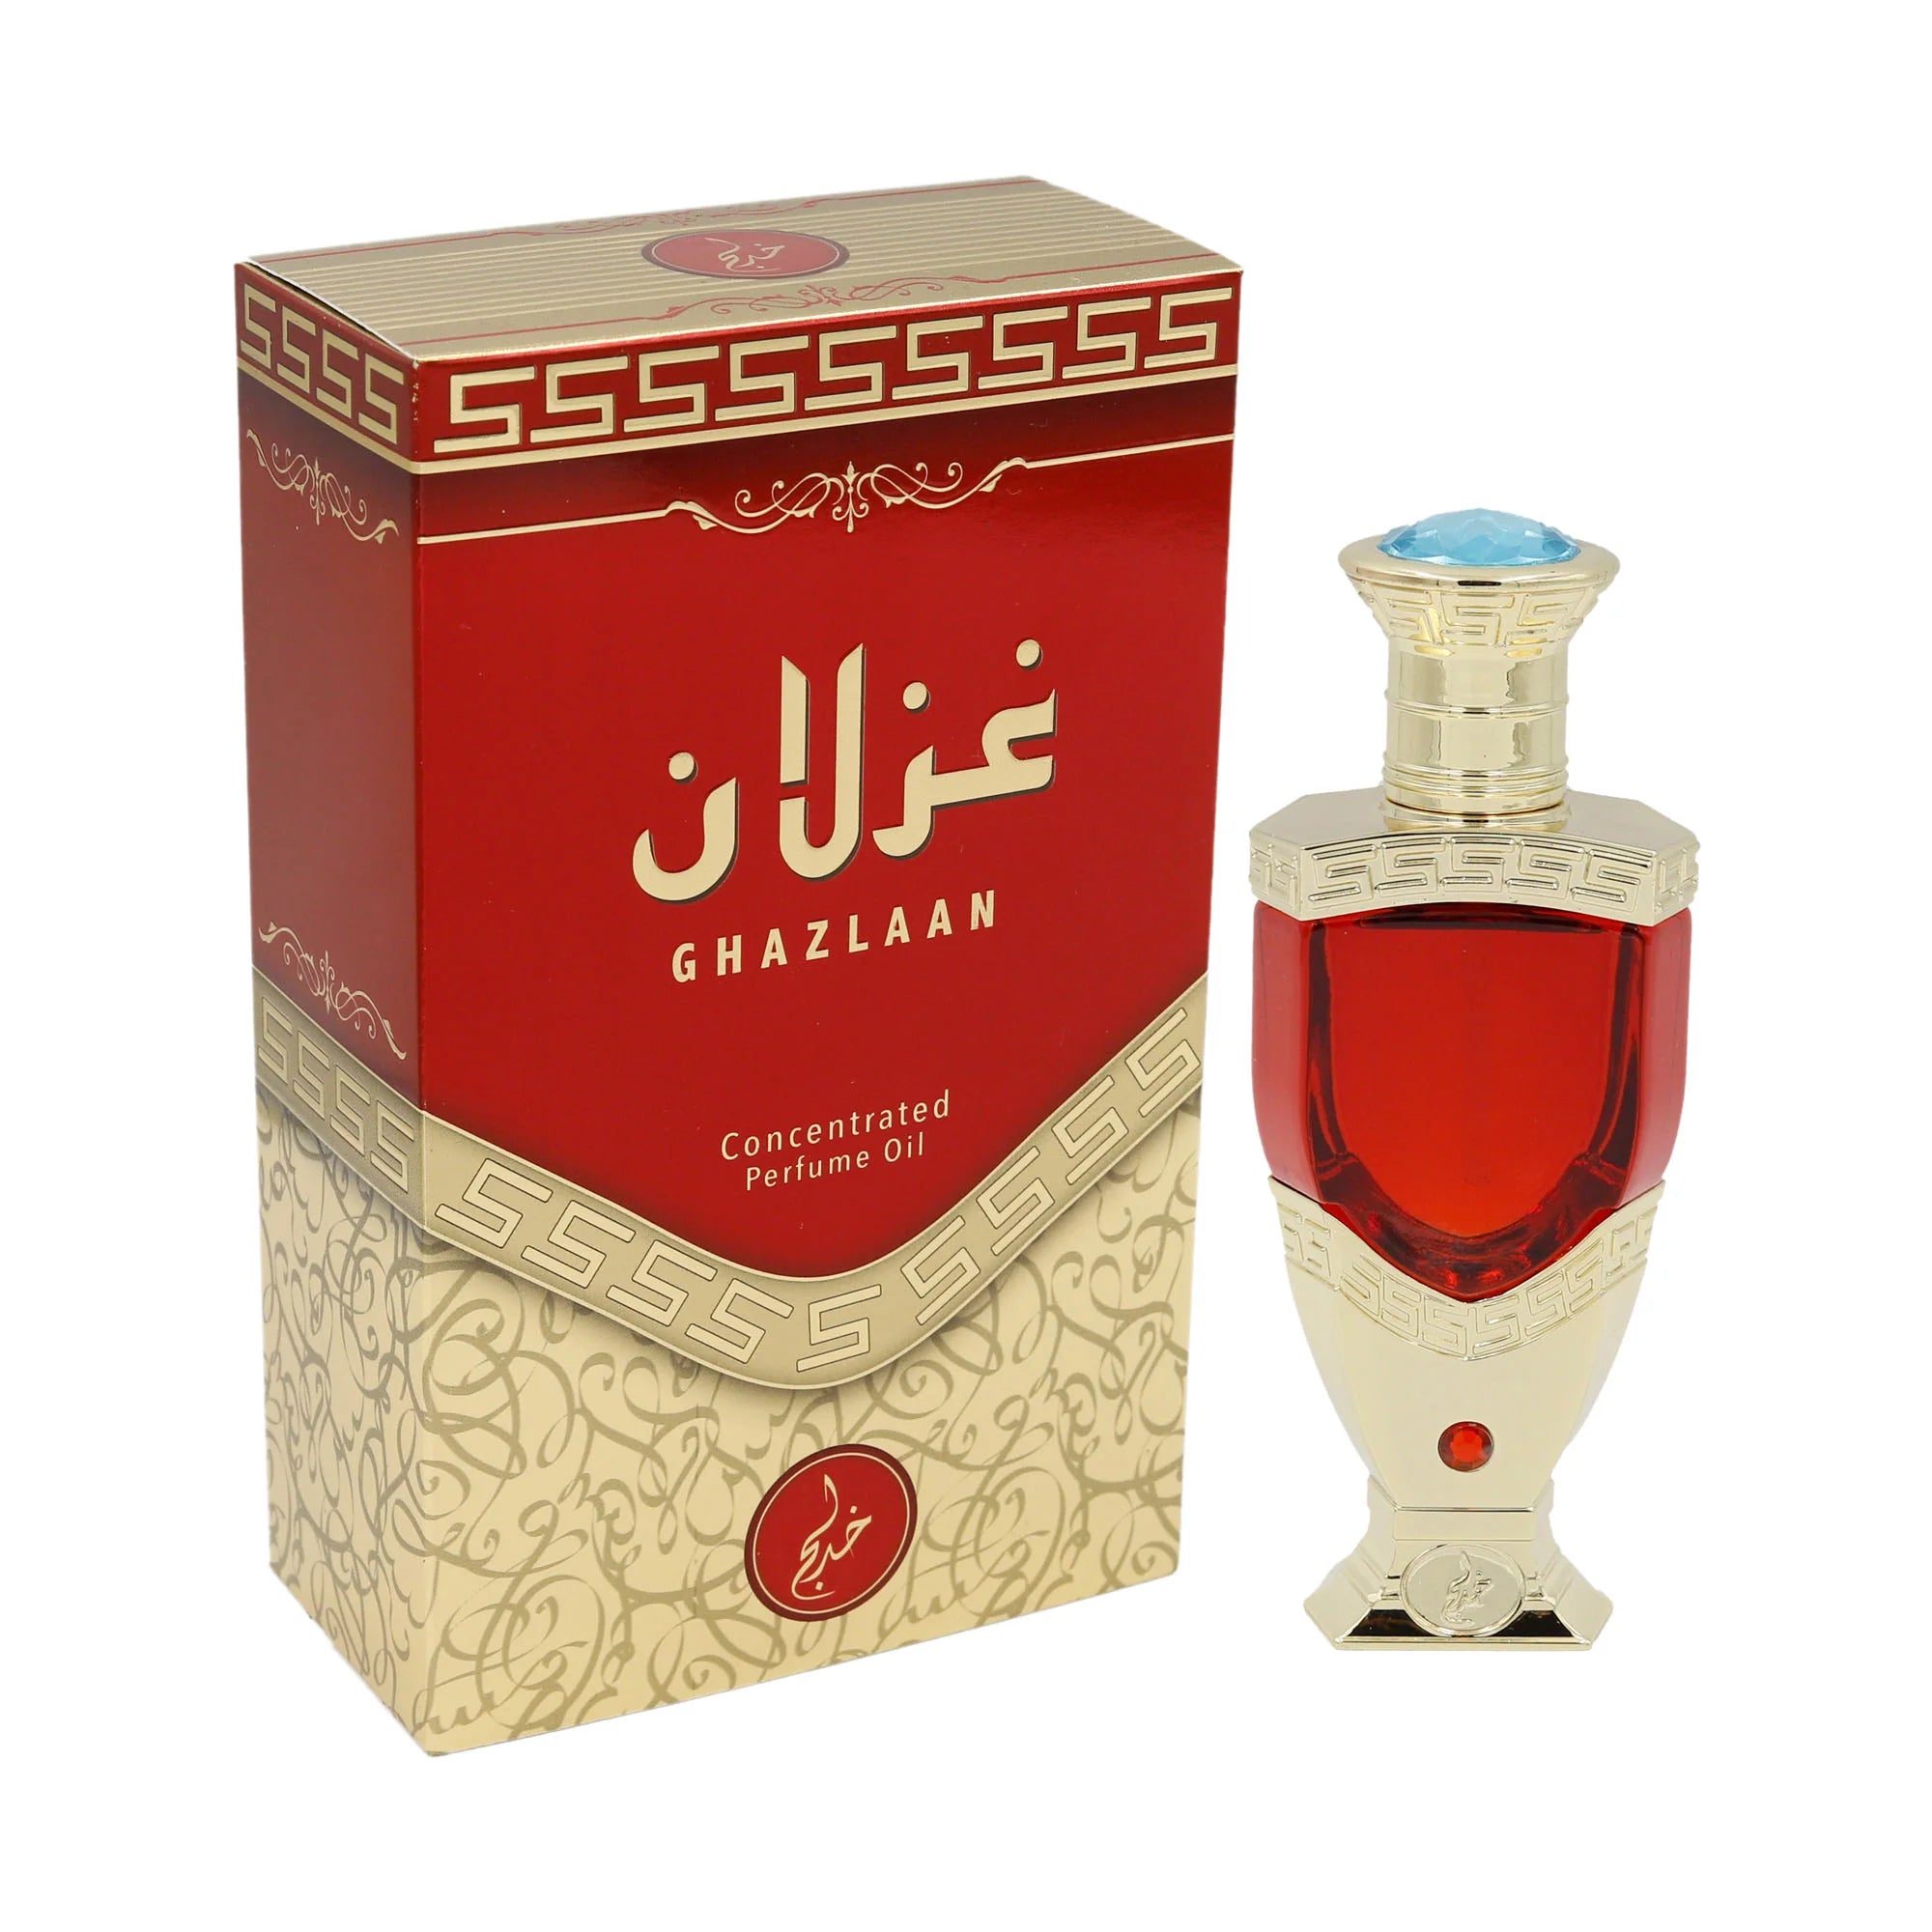 Ghazlaan EDP (20ml) spray perfume by Khadlaj | Khan El Khalili